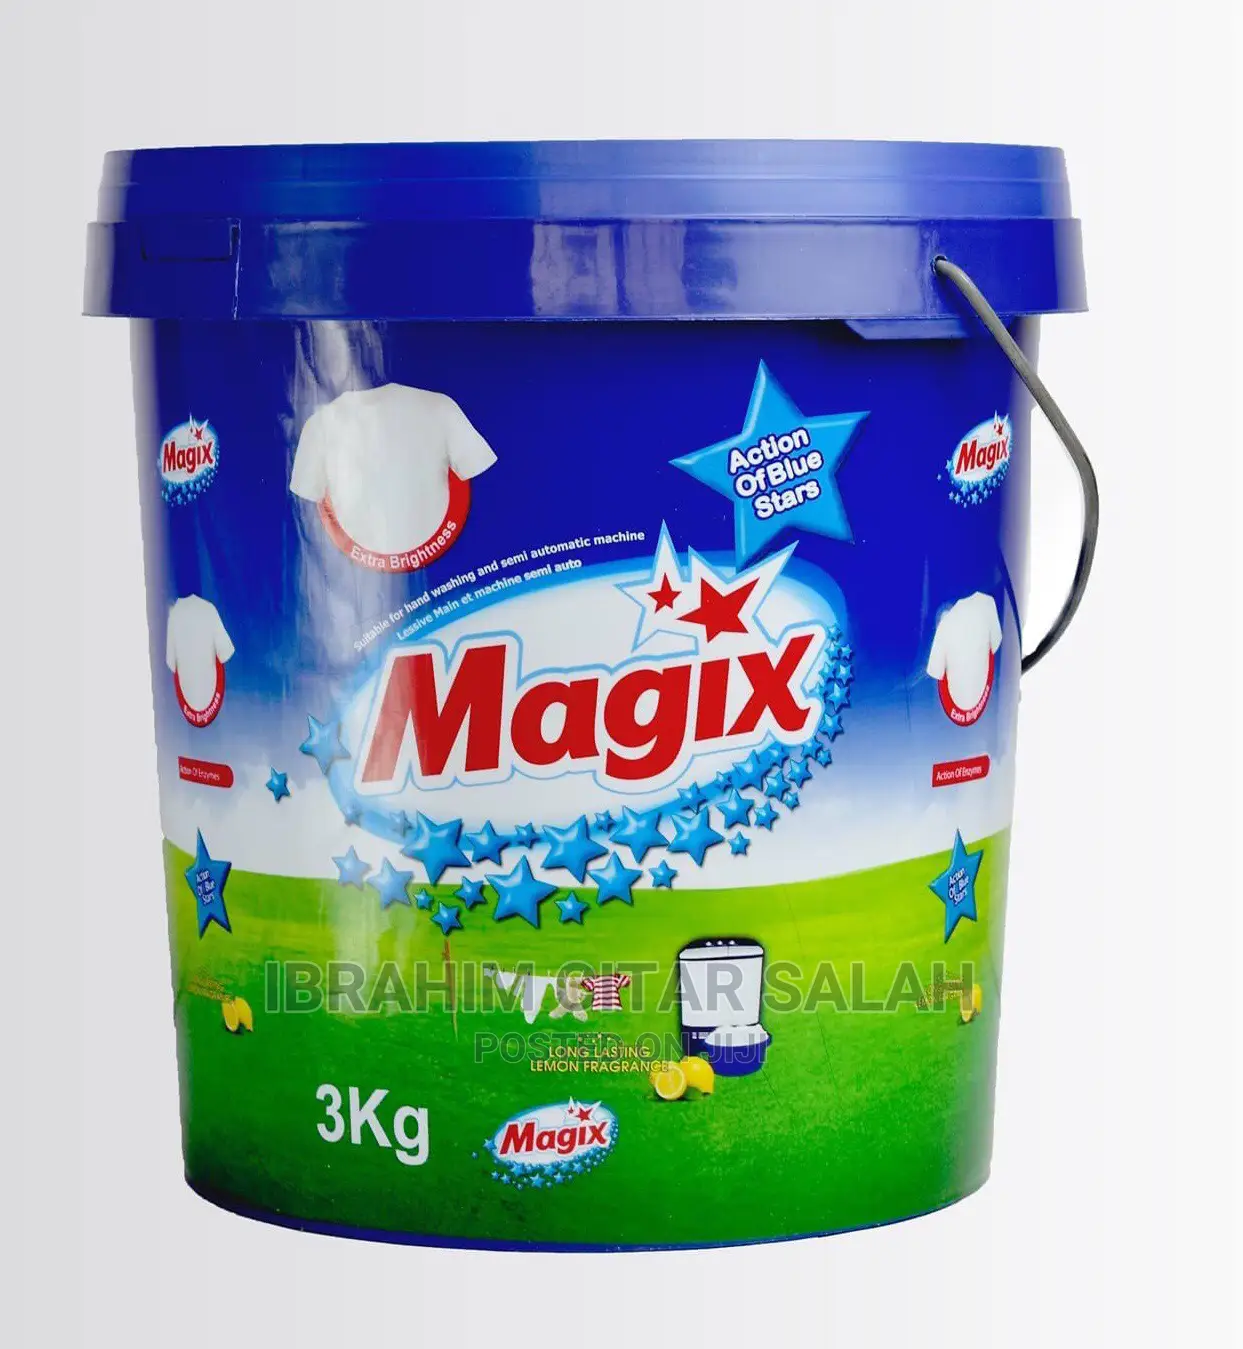 Magix Washing Powder Buckets 3kg